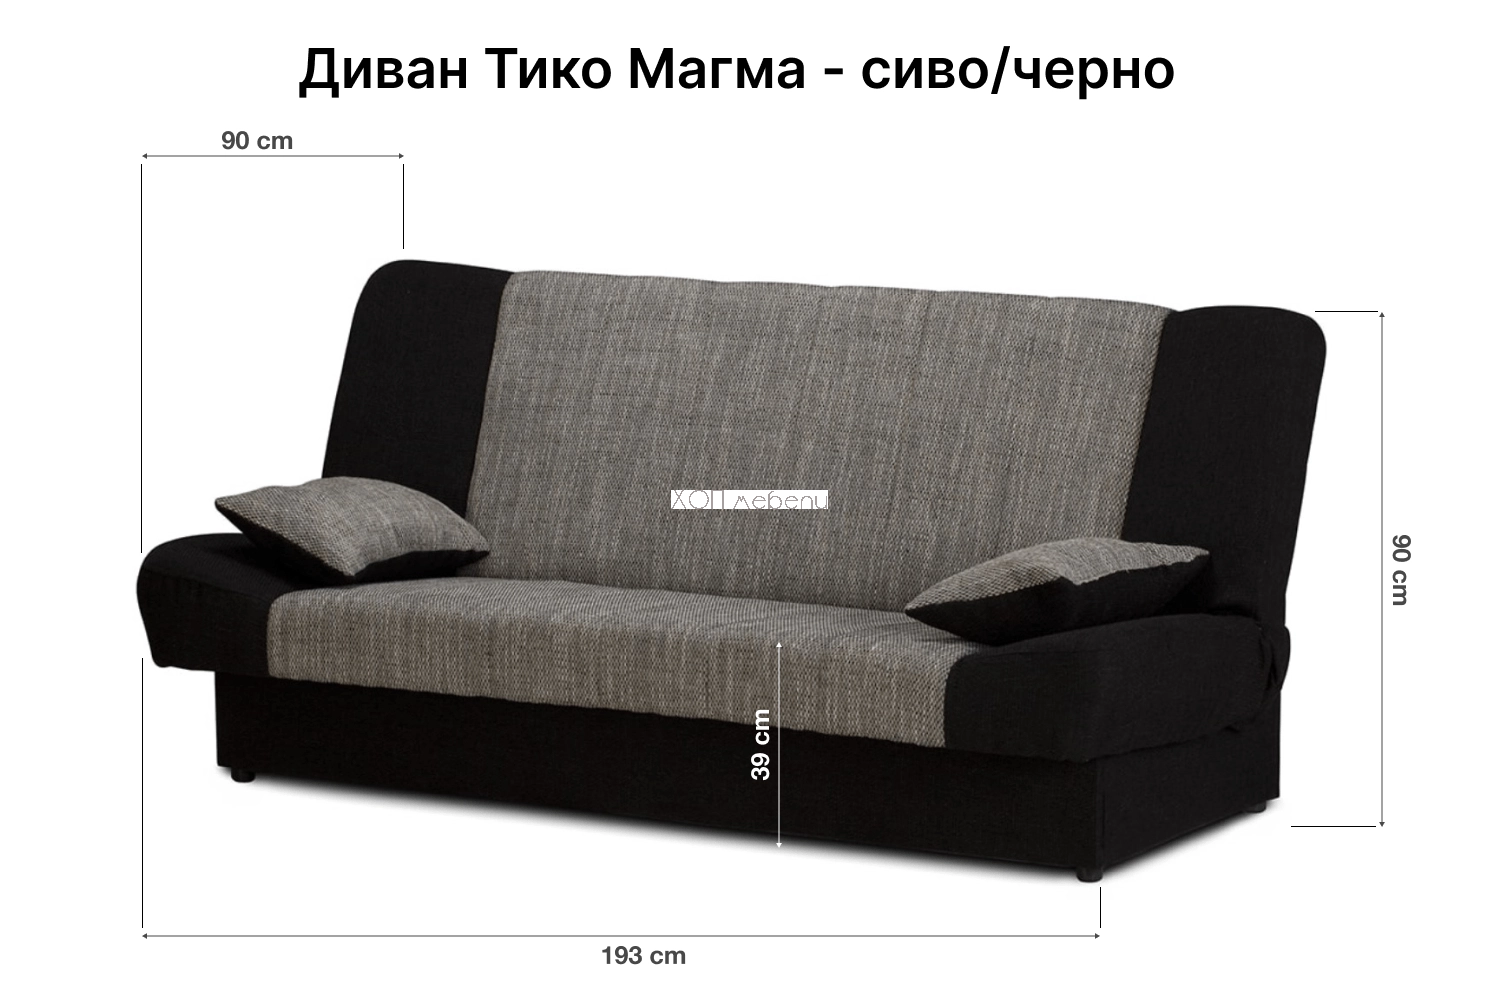 Размери на Диван Тико Магма - сиво/черно ID 12044 - 1